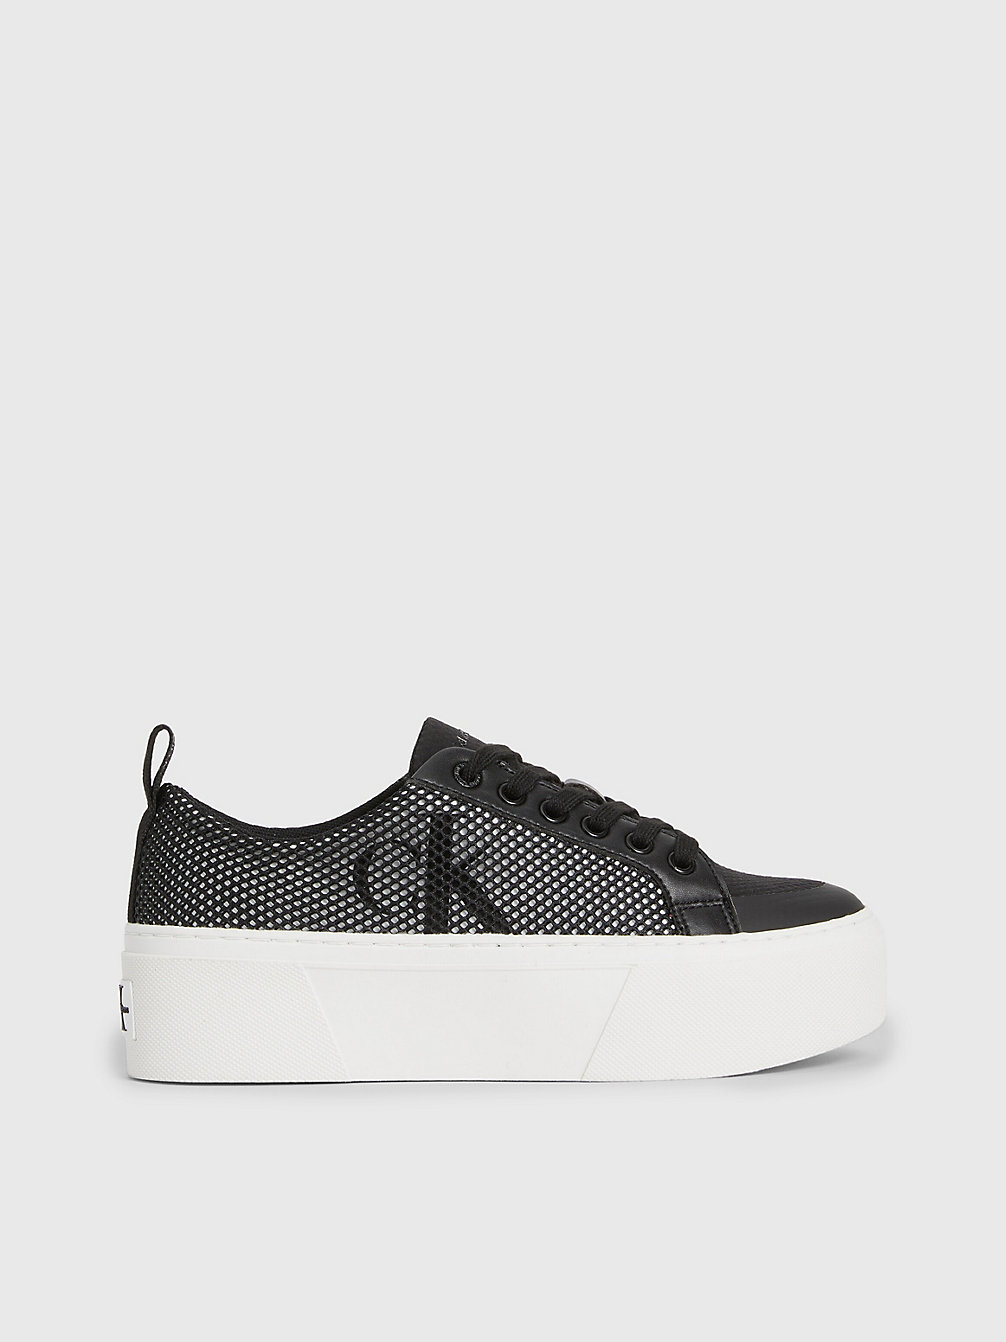 BLACK/WHITE > Plateau-Sneakers Aus Recyceltem Mesh-Material > undefined Damen - Calvin Klein